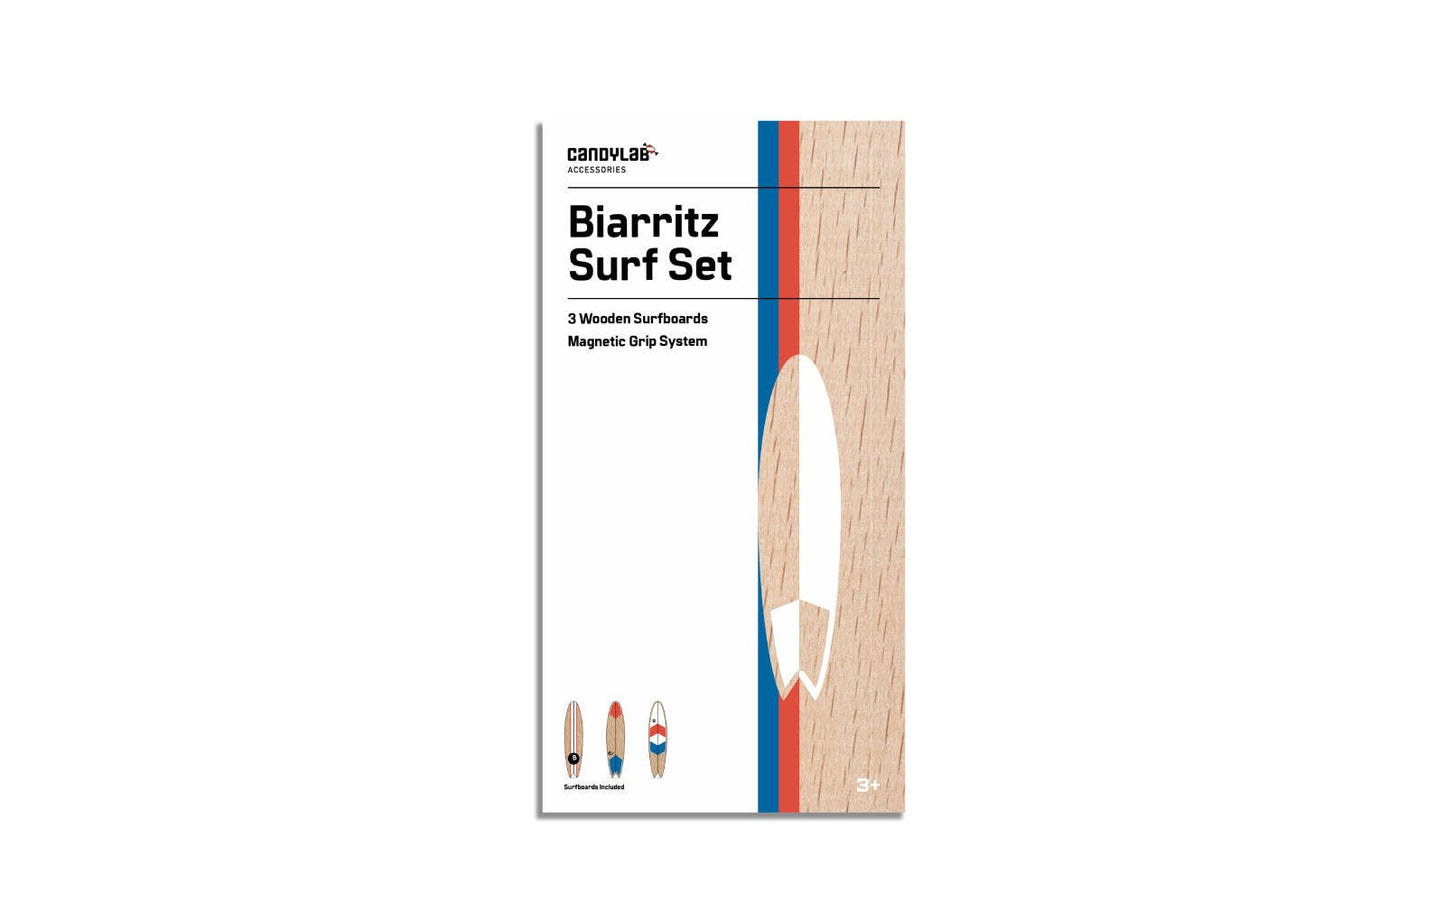 Biarritz Surf Set